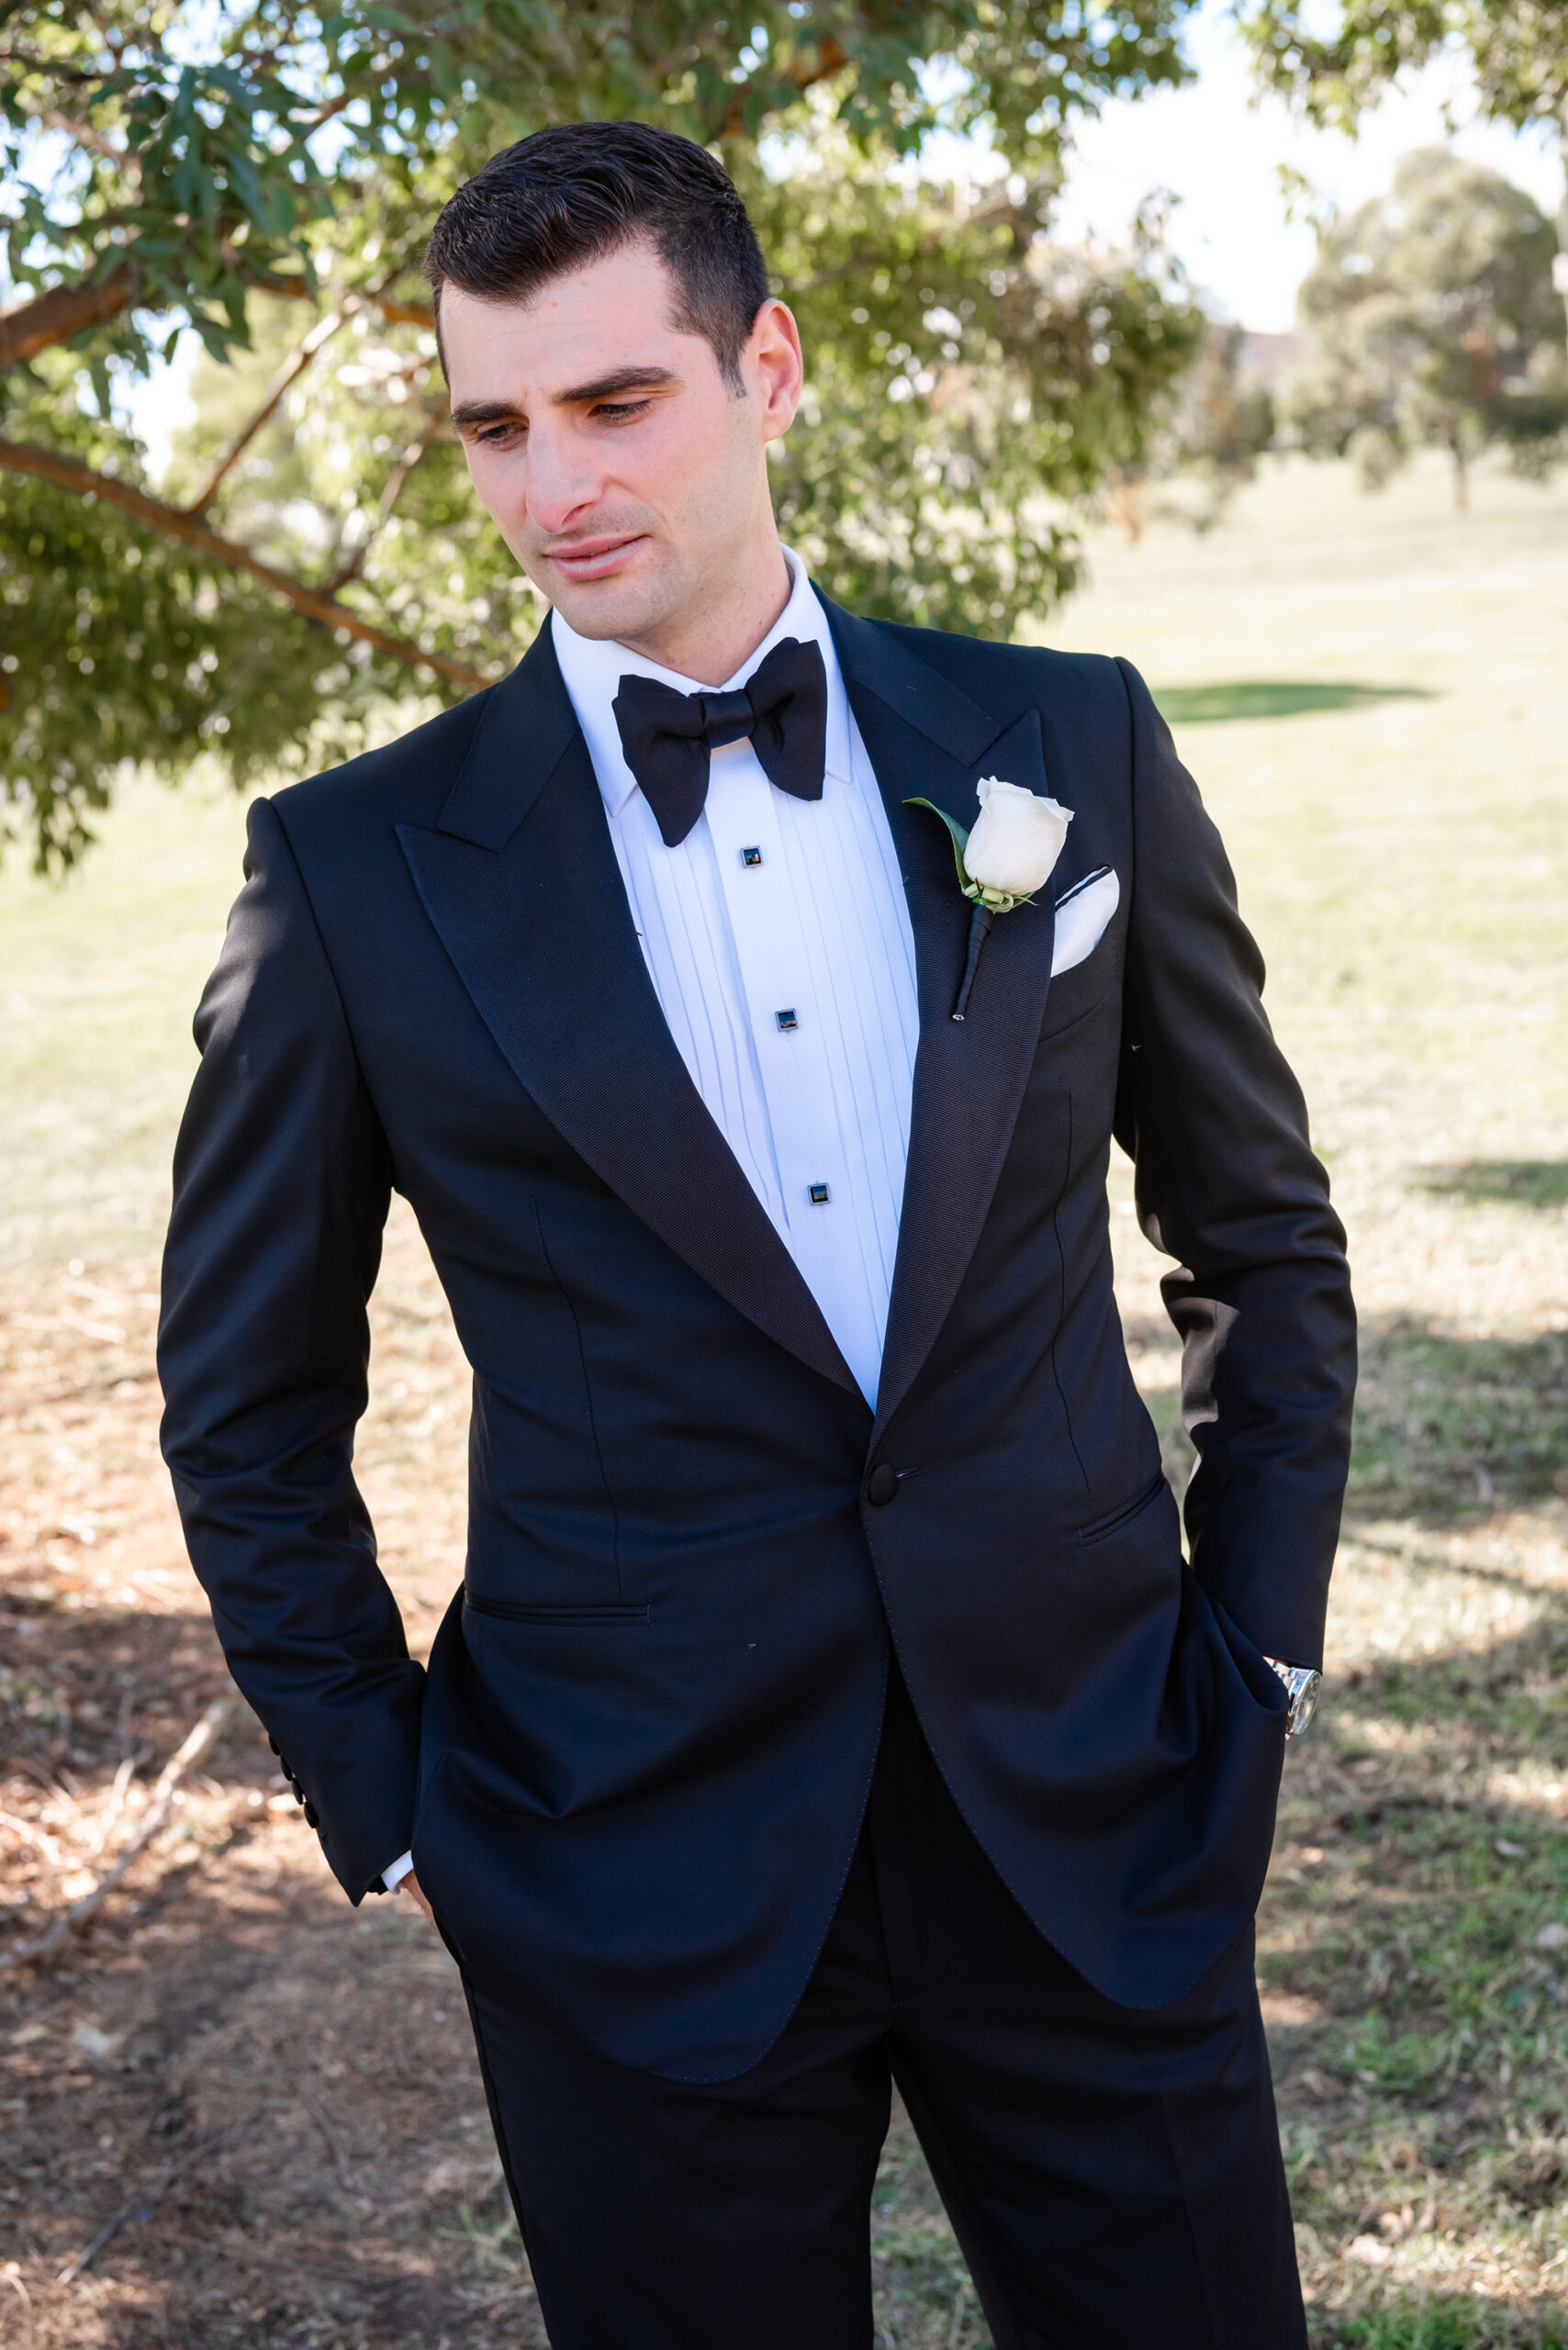 Modern fairytale: Deana and Matthew's black tie wedding | Easy Weddings